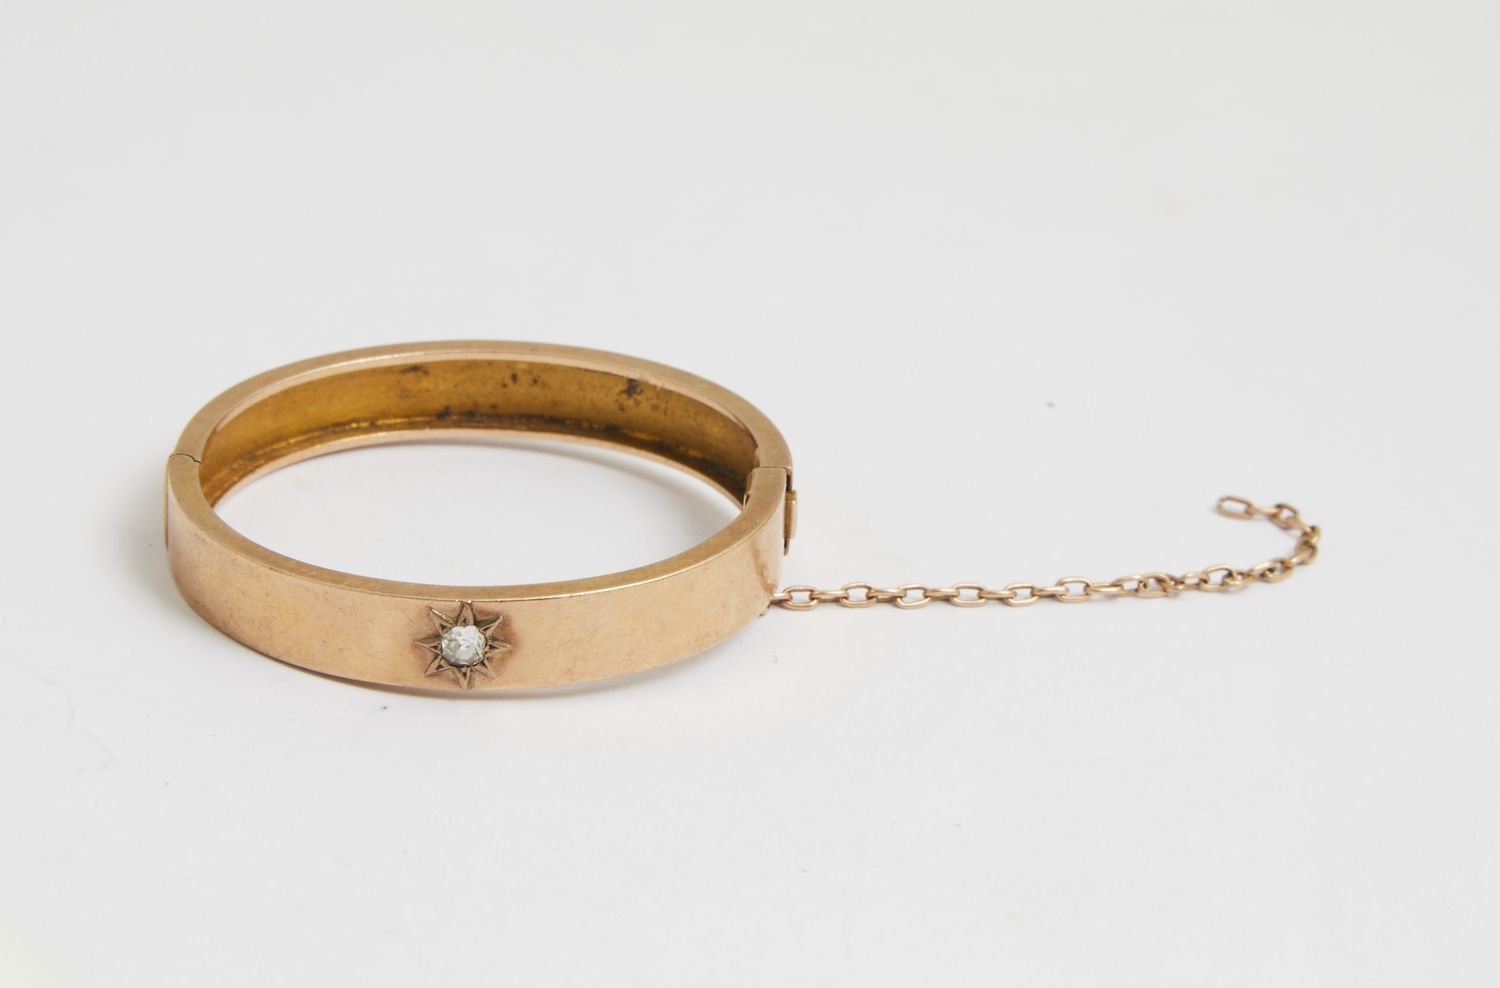 Null 351 14 K gold birth bracelet with diamond rose circa 1860.


8g